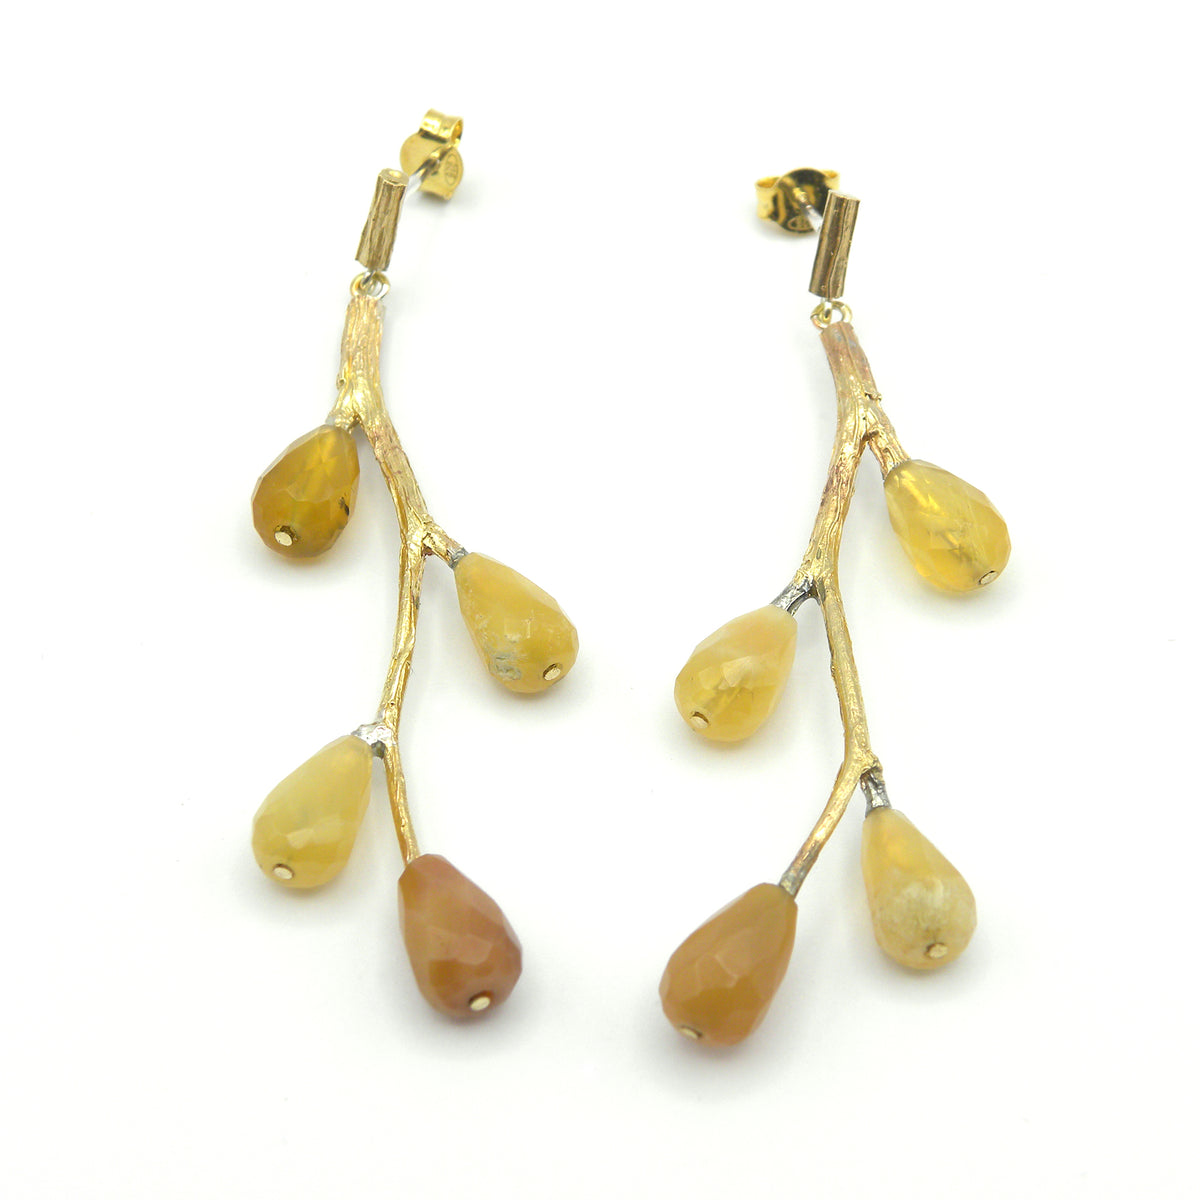 Sprig earrings with large carnelian drops